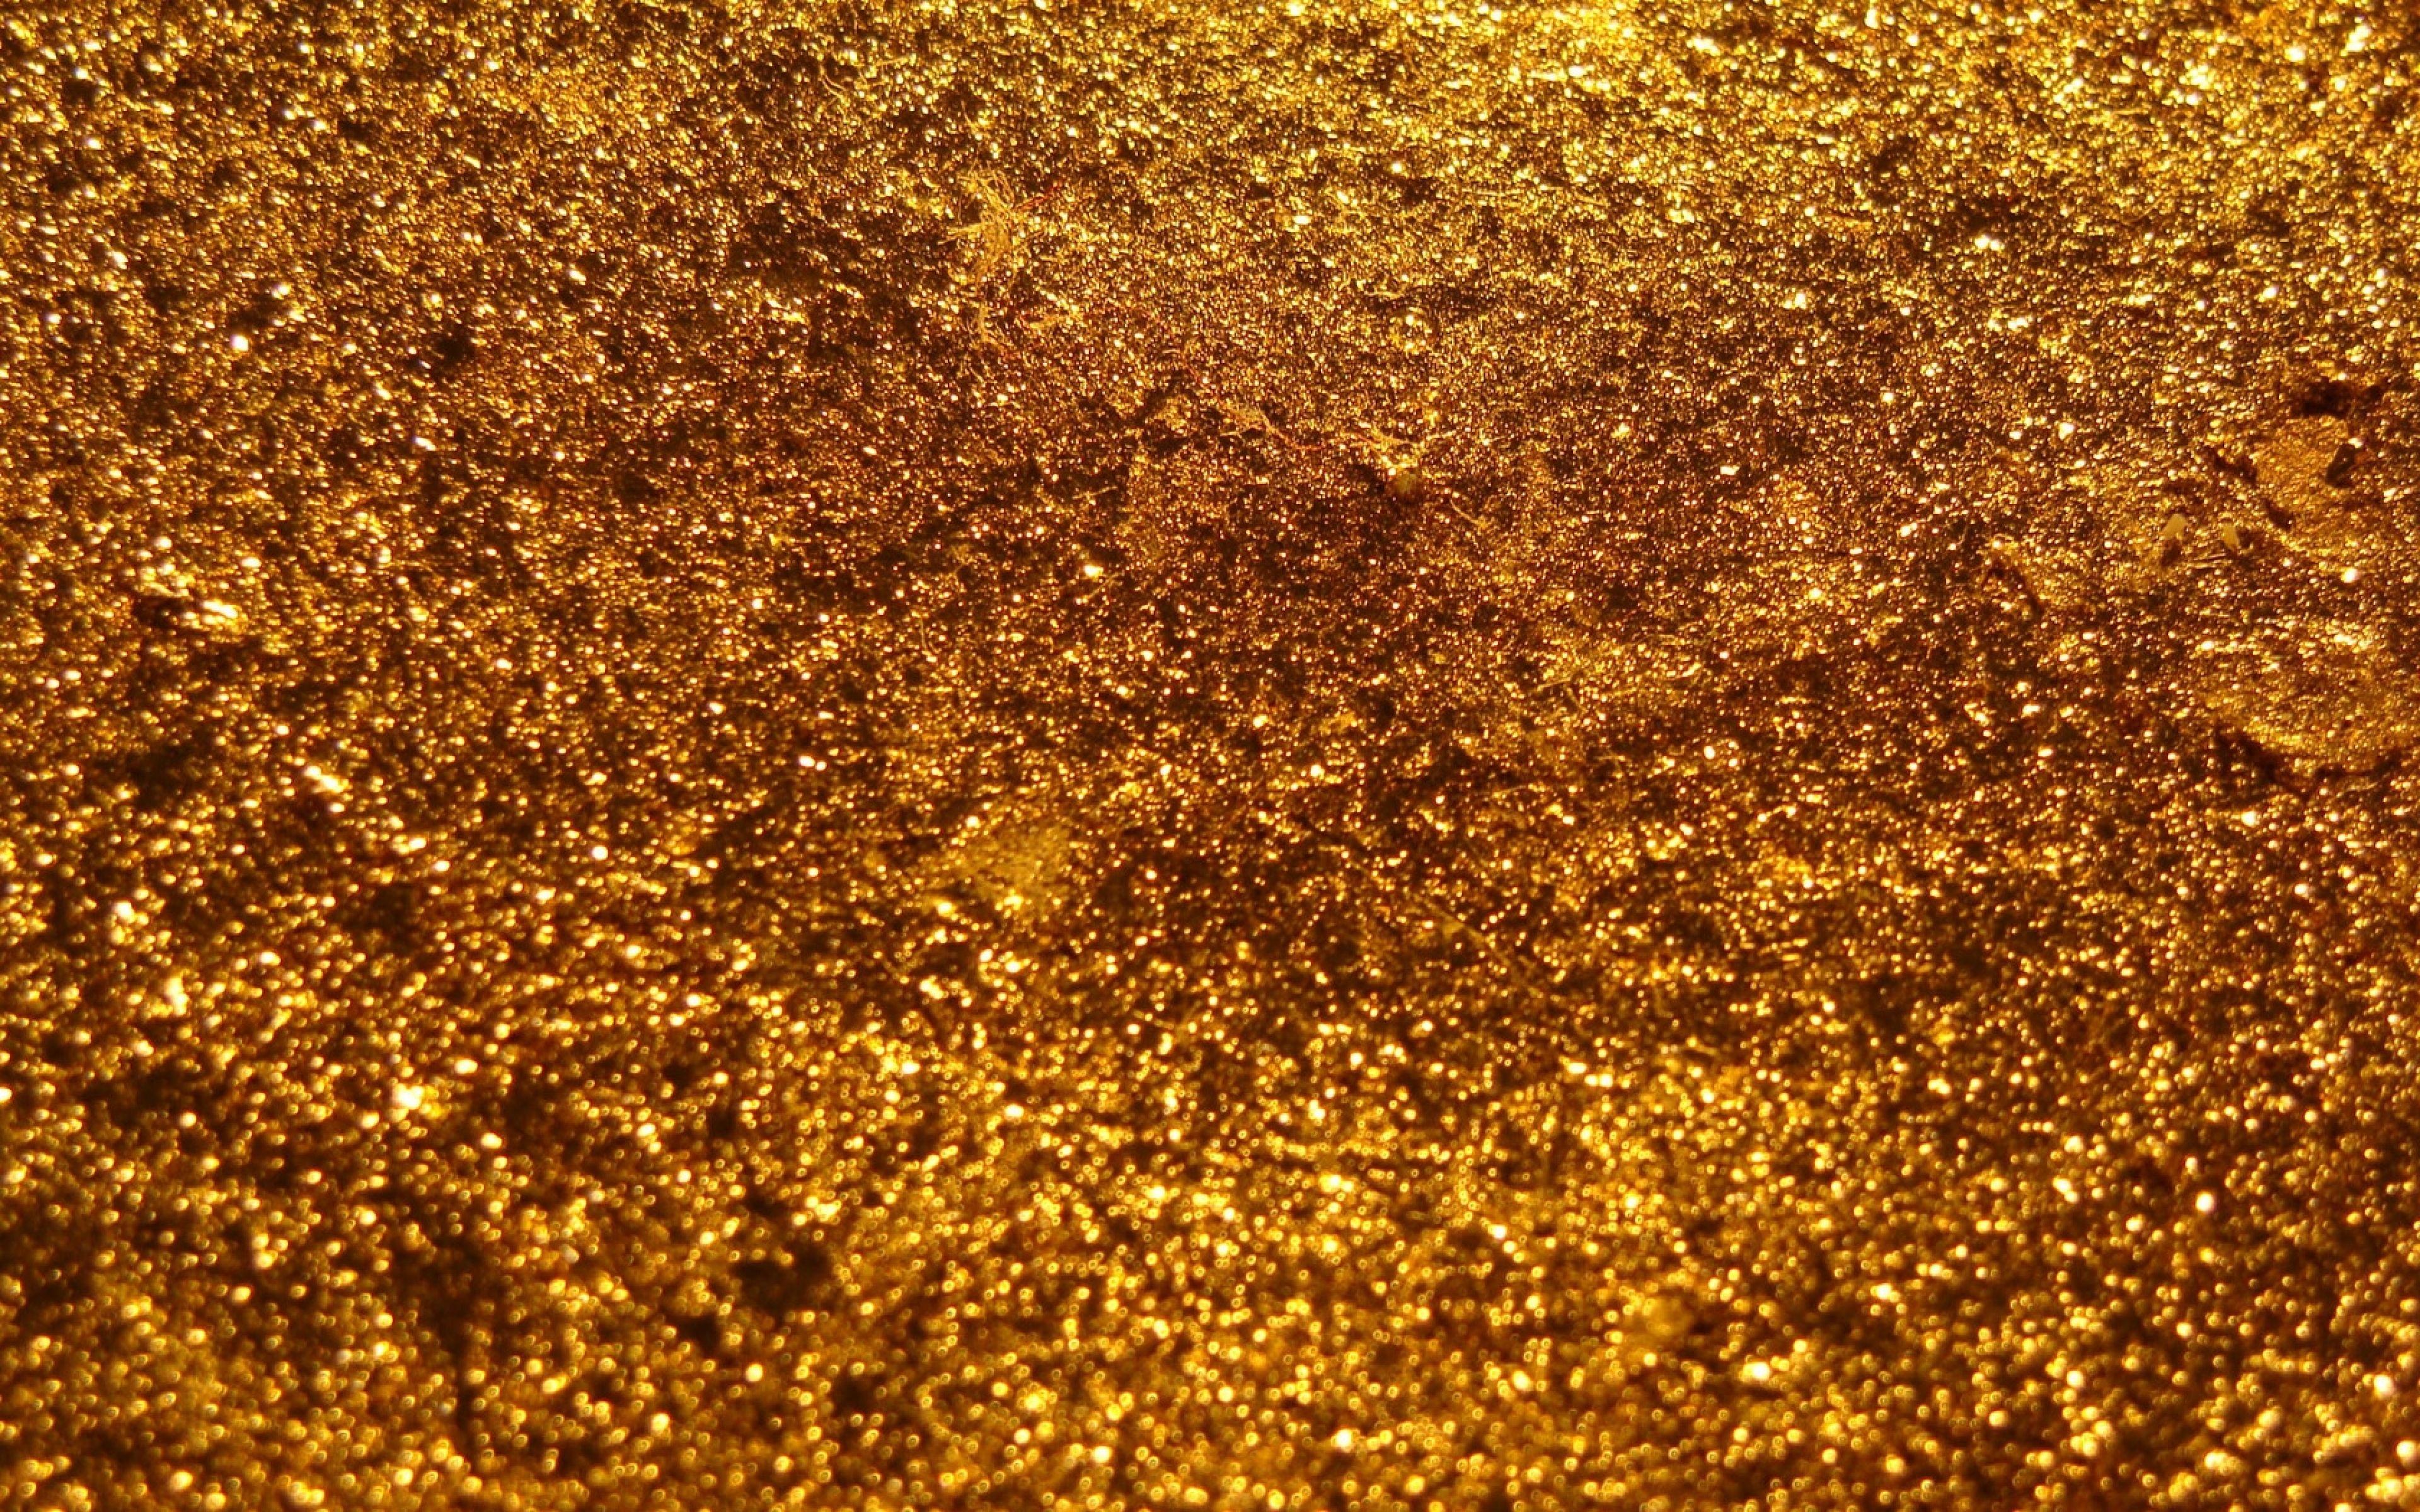 Ultra HD 4K Gold Wallpaper HD, Desktop Background 3840x2400. Papel tapiz de oro, Tapiz de pared brillante, Wallpaper dorado